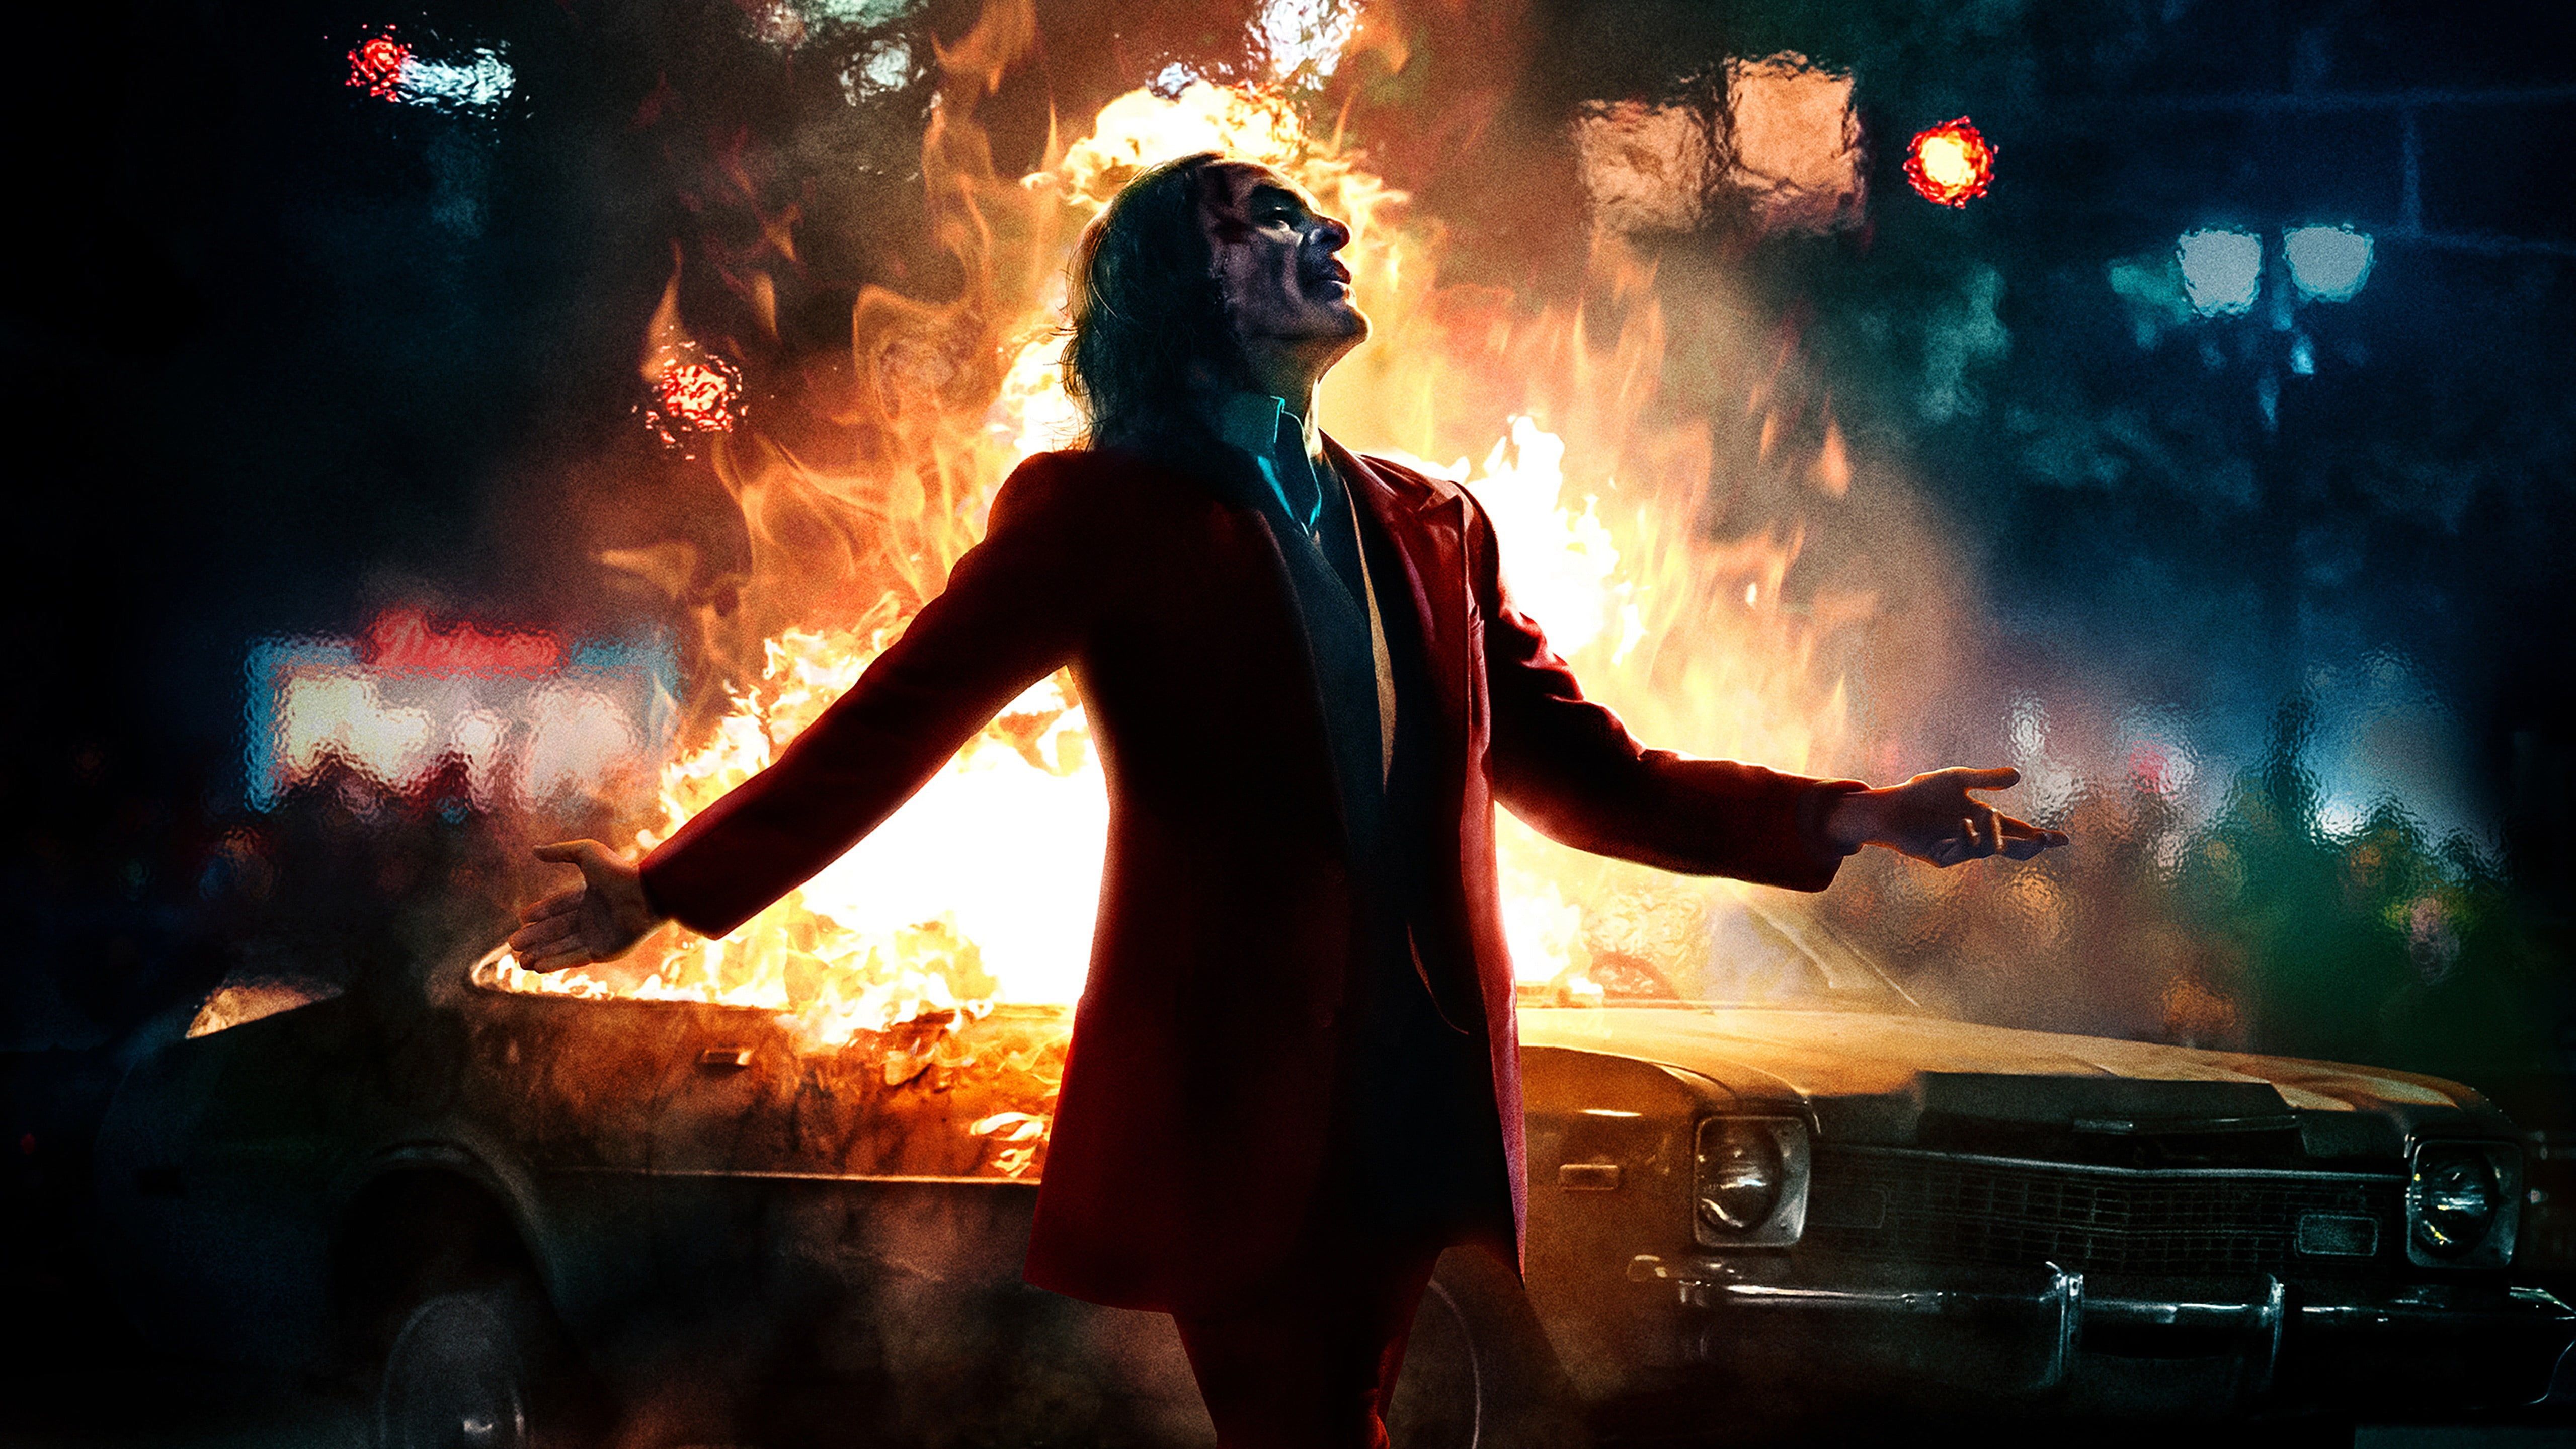 Joaquin Phoenix #Joker #Batman #fire #car Joker 2019 Movie